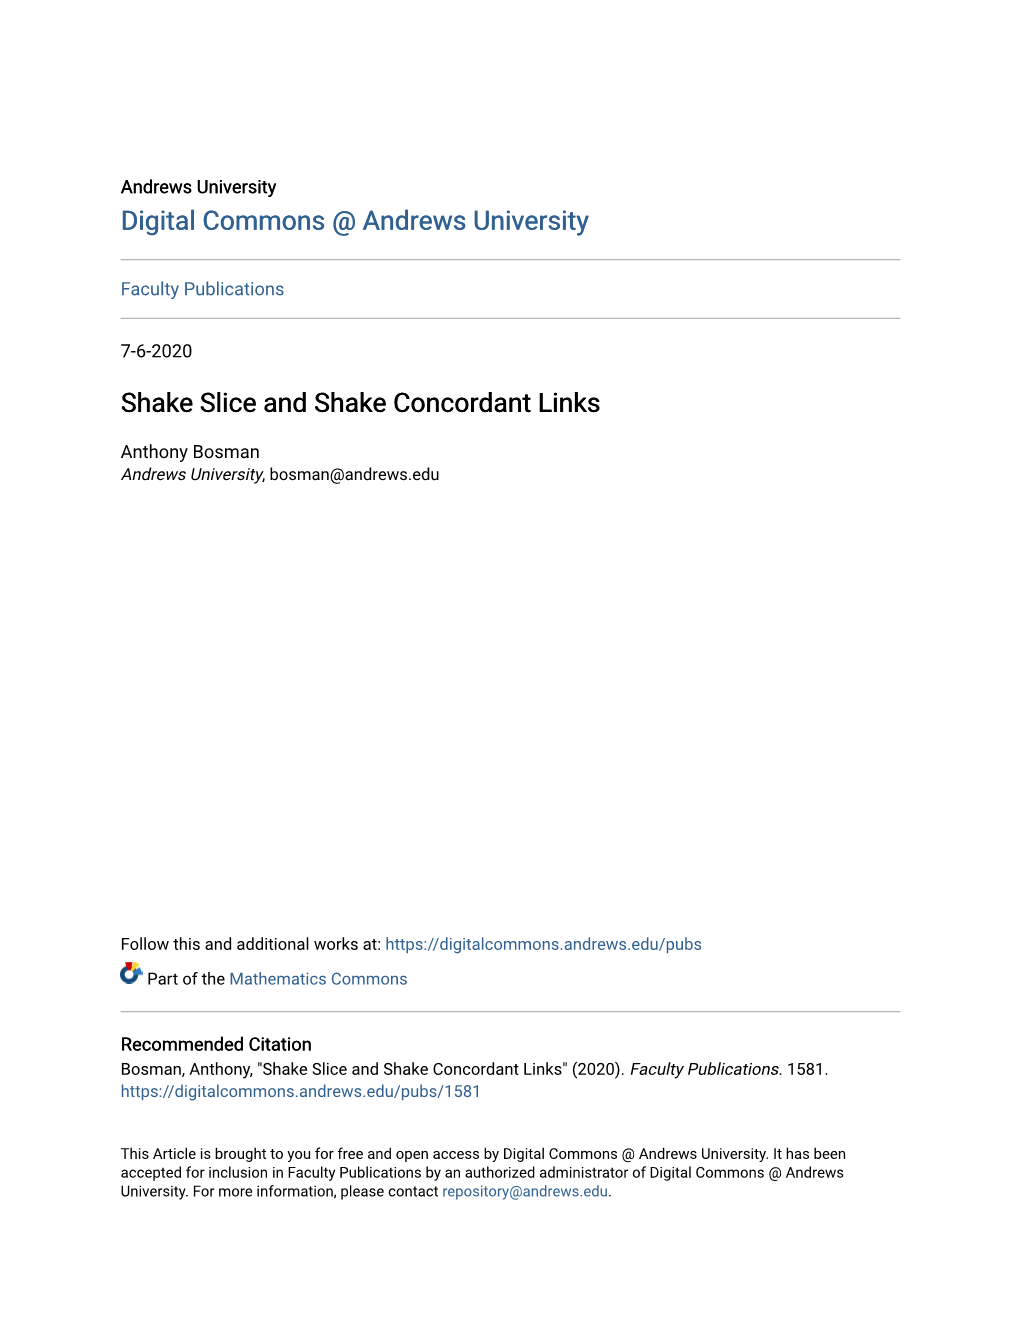 Shake Slice and Shake Concordant Links